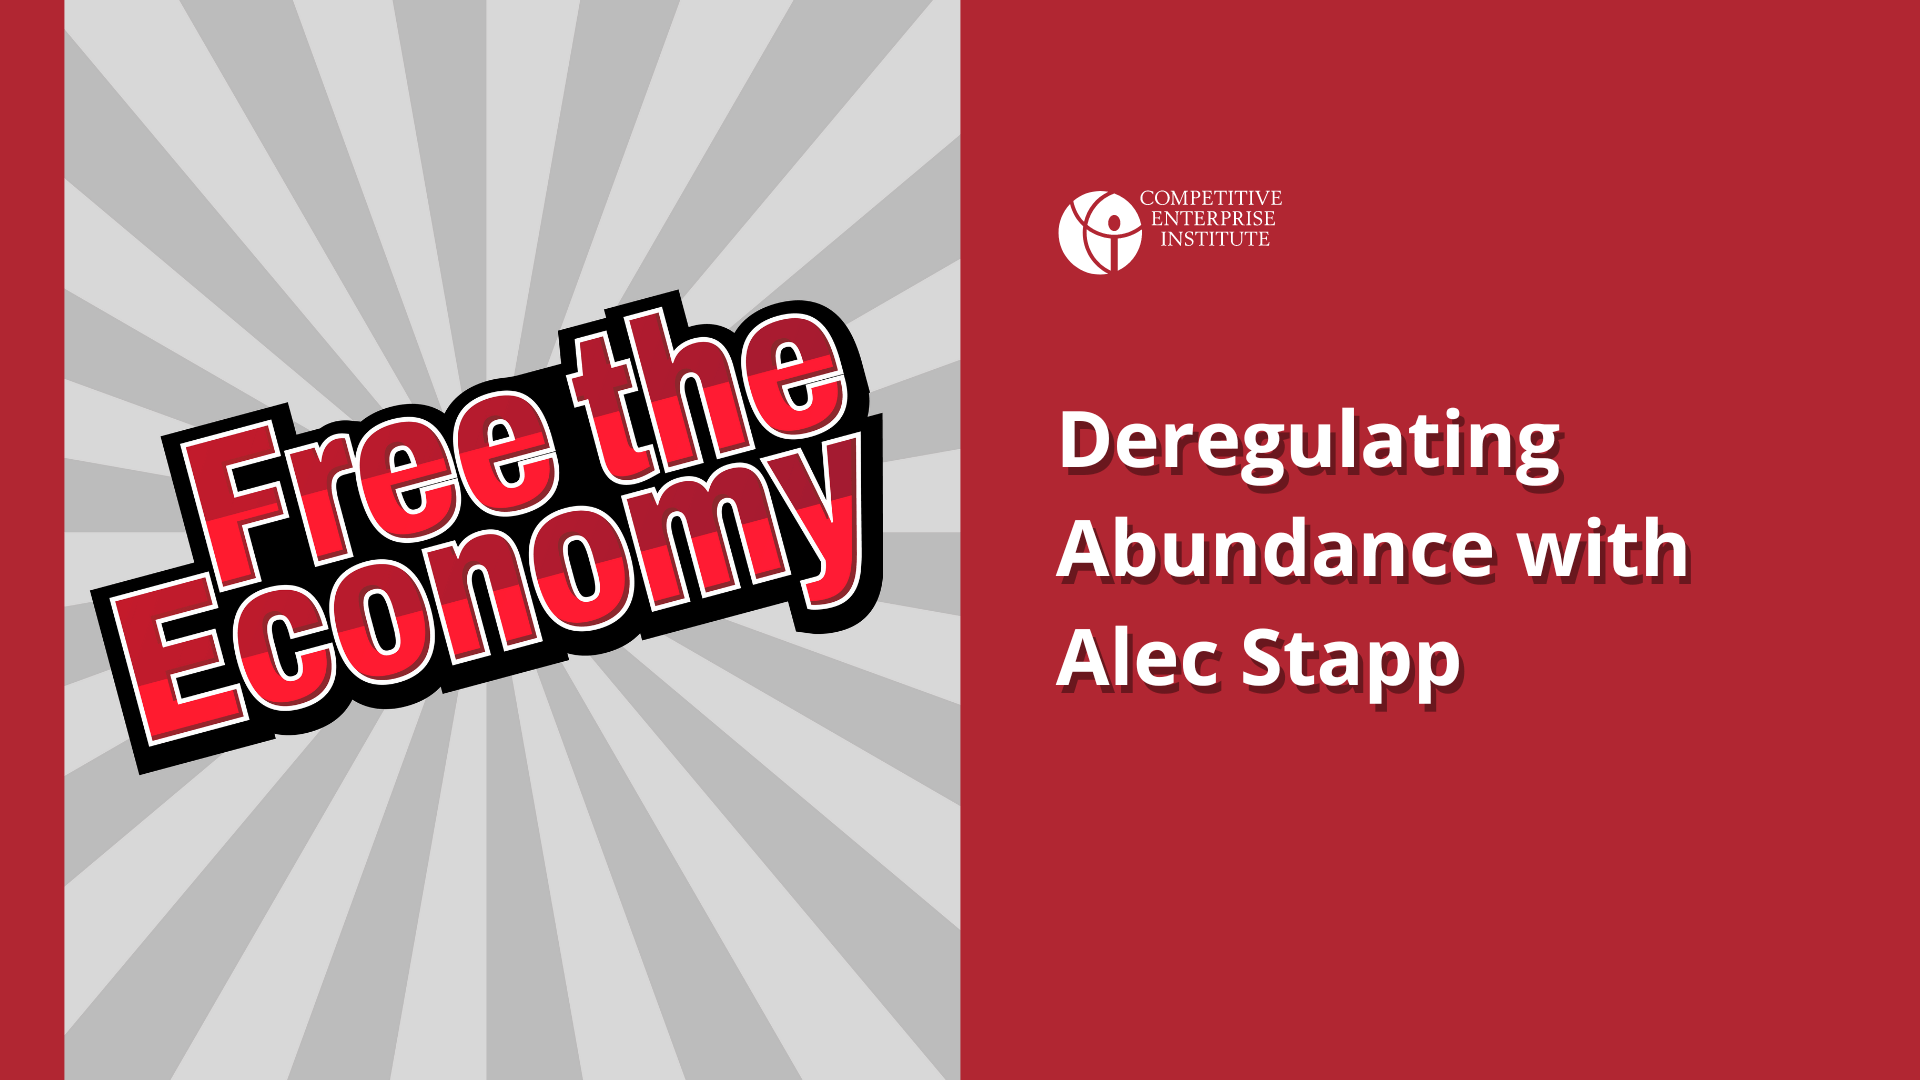 Deregulating Abundance with Alec Stapp